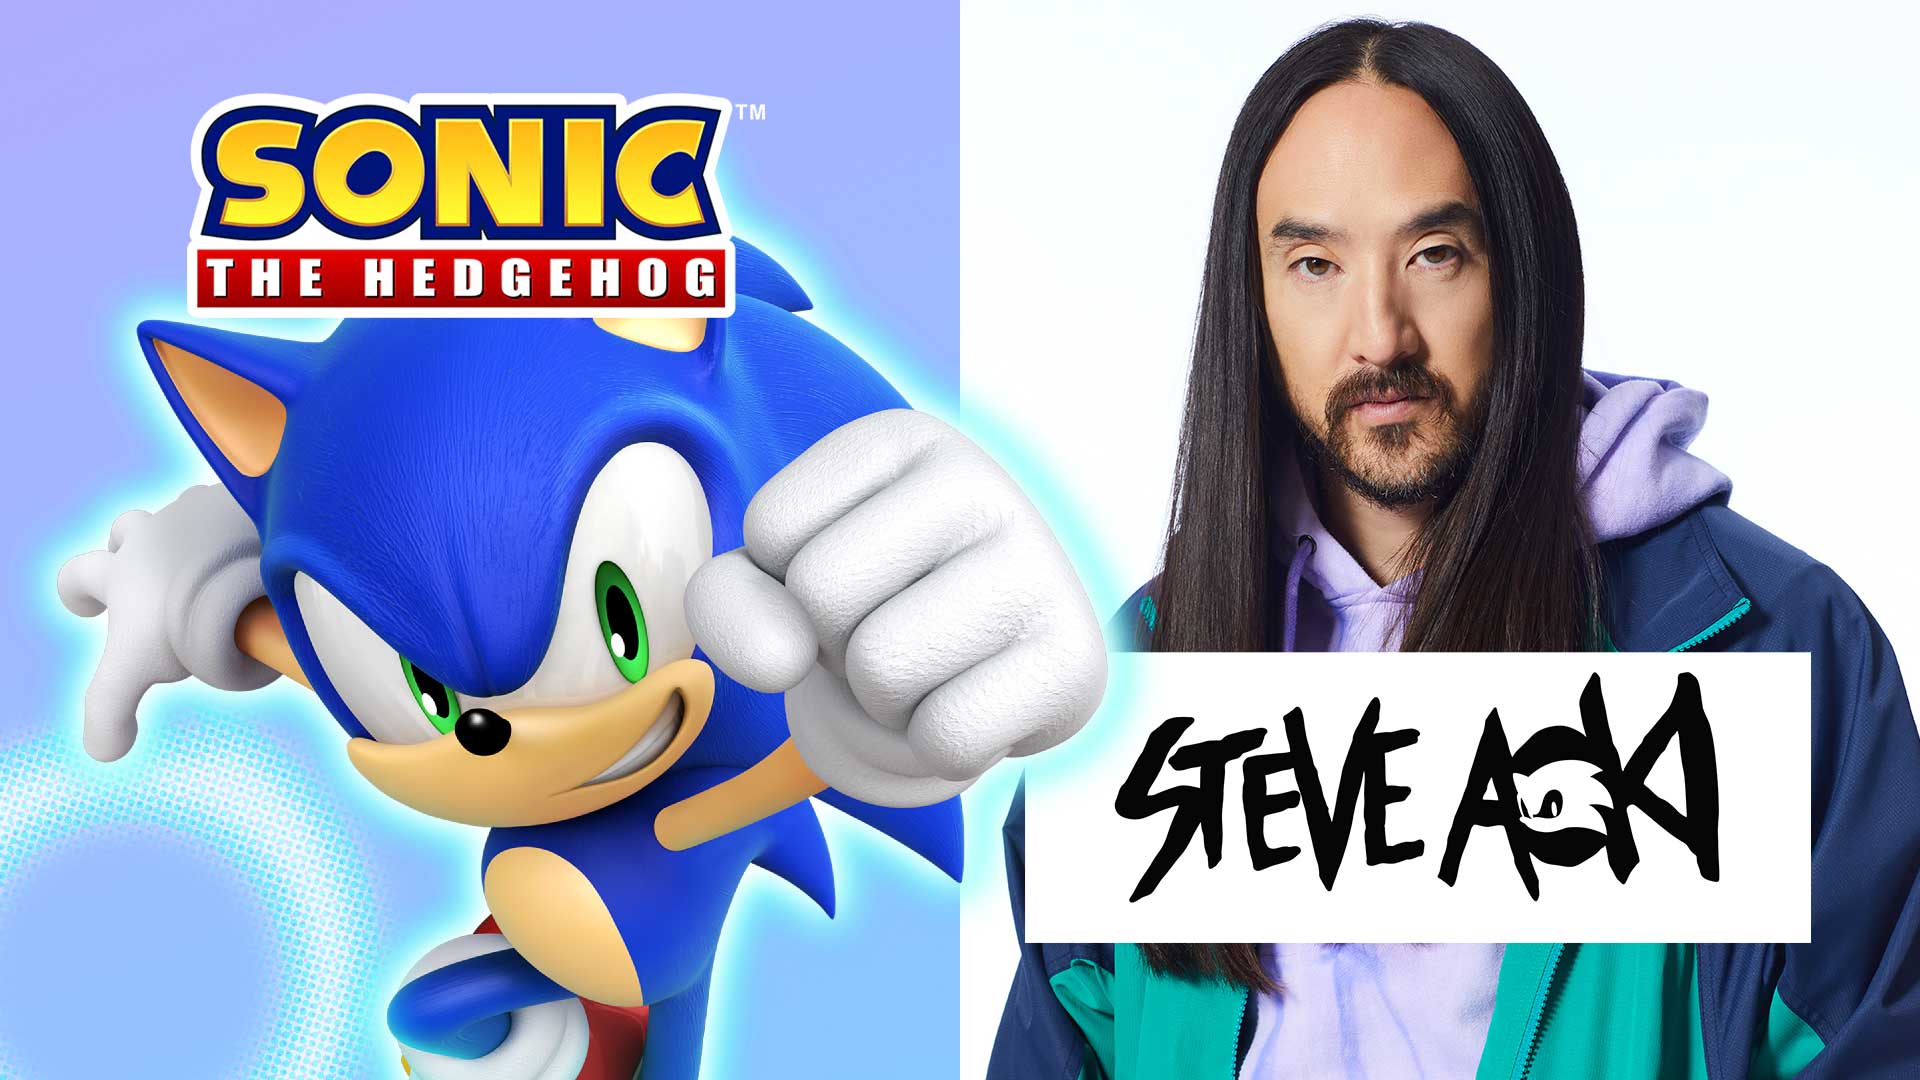 Steve Aoki starts a virtual concert on Sonic’s 30th birthday